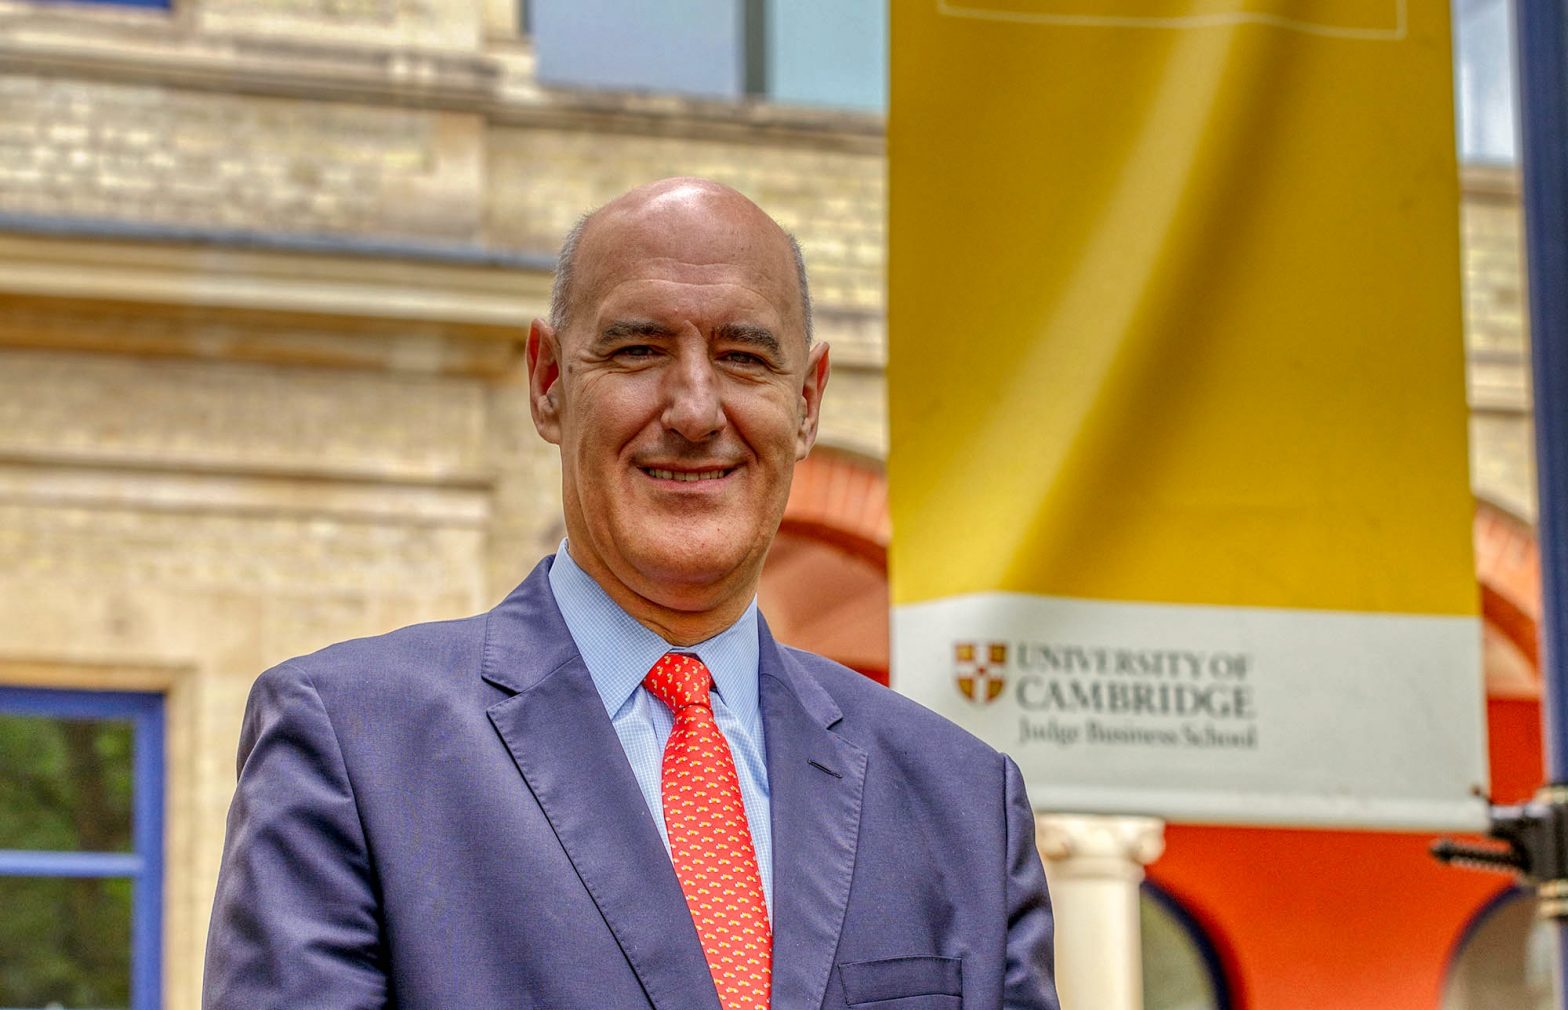 Professor Mauro Guillén, Dean of the Cambridge Judge Business School